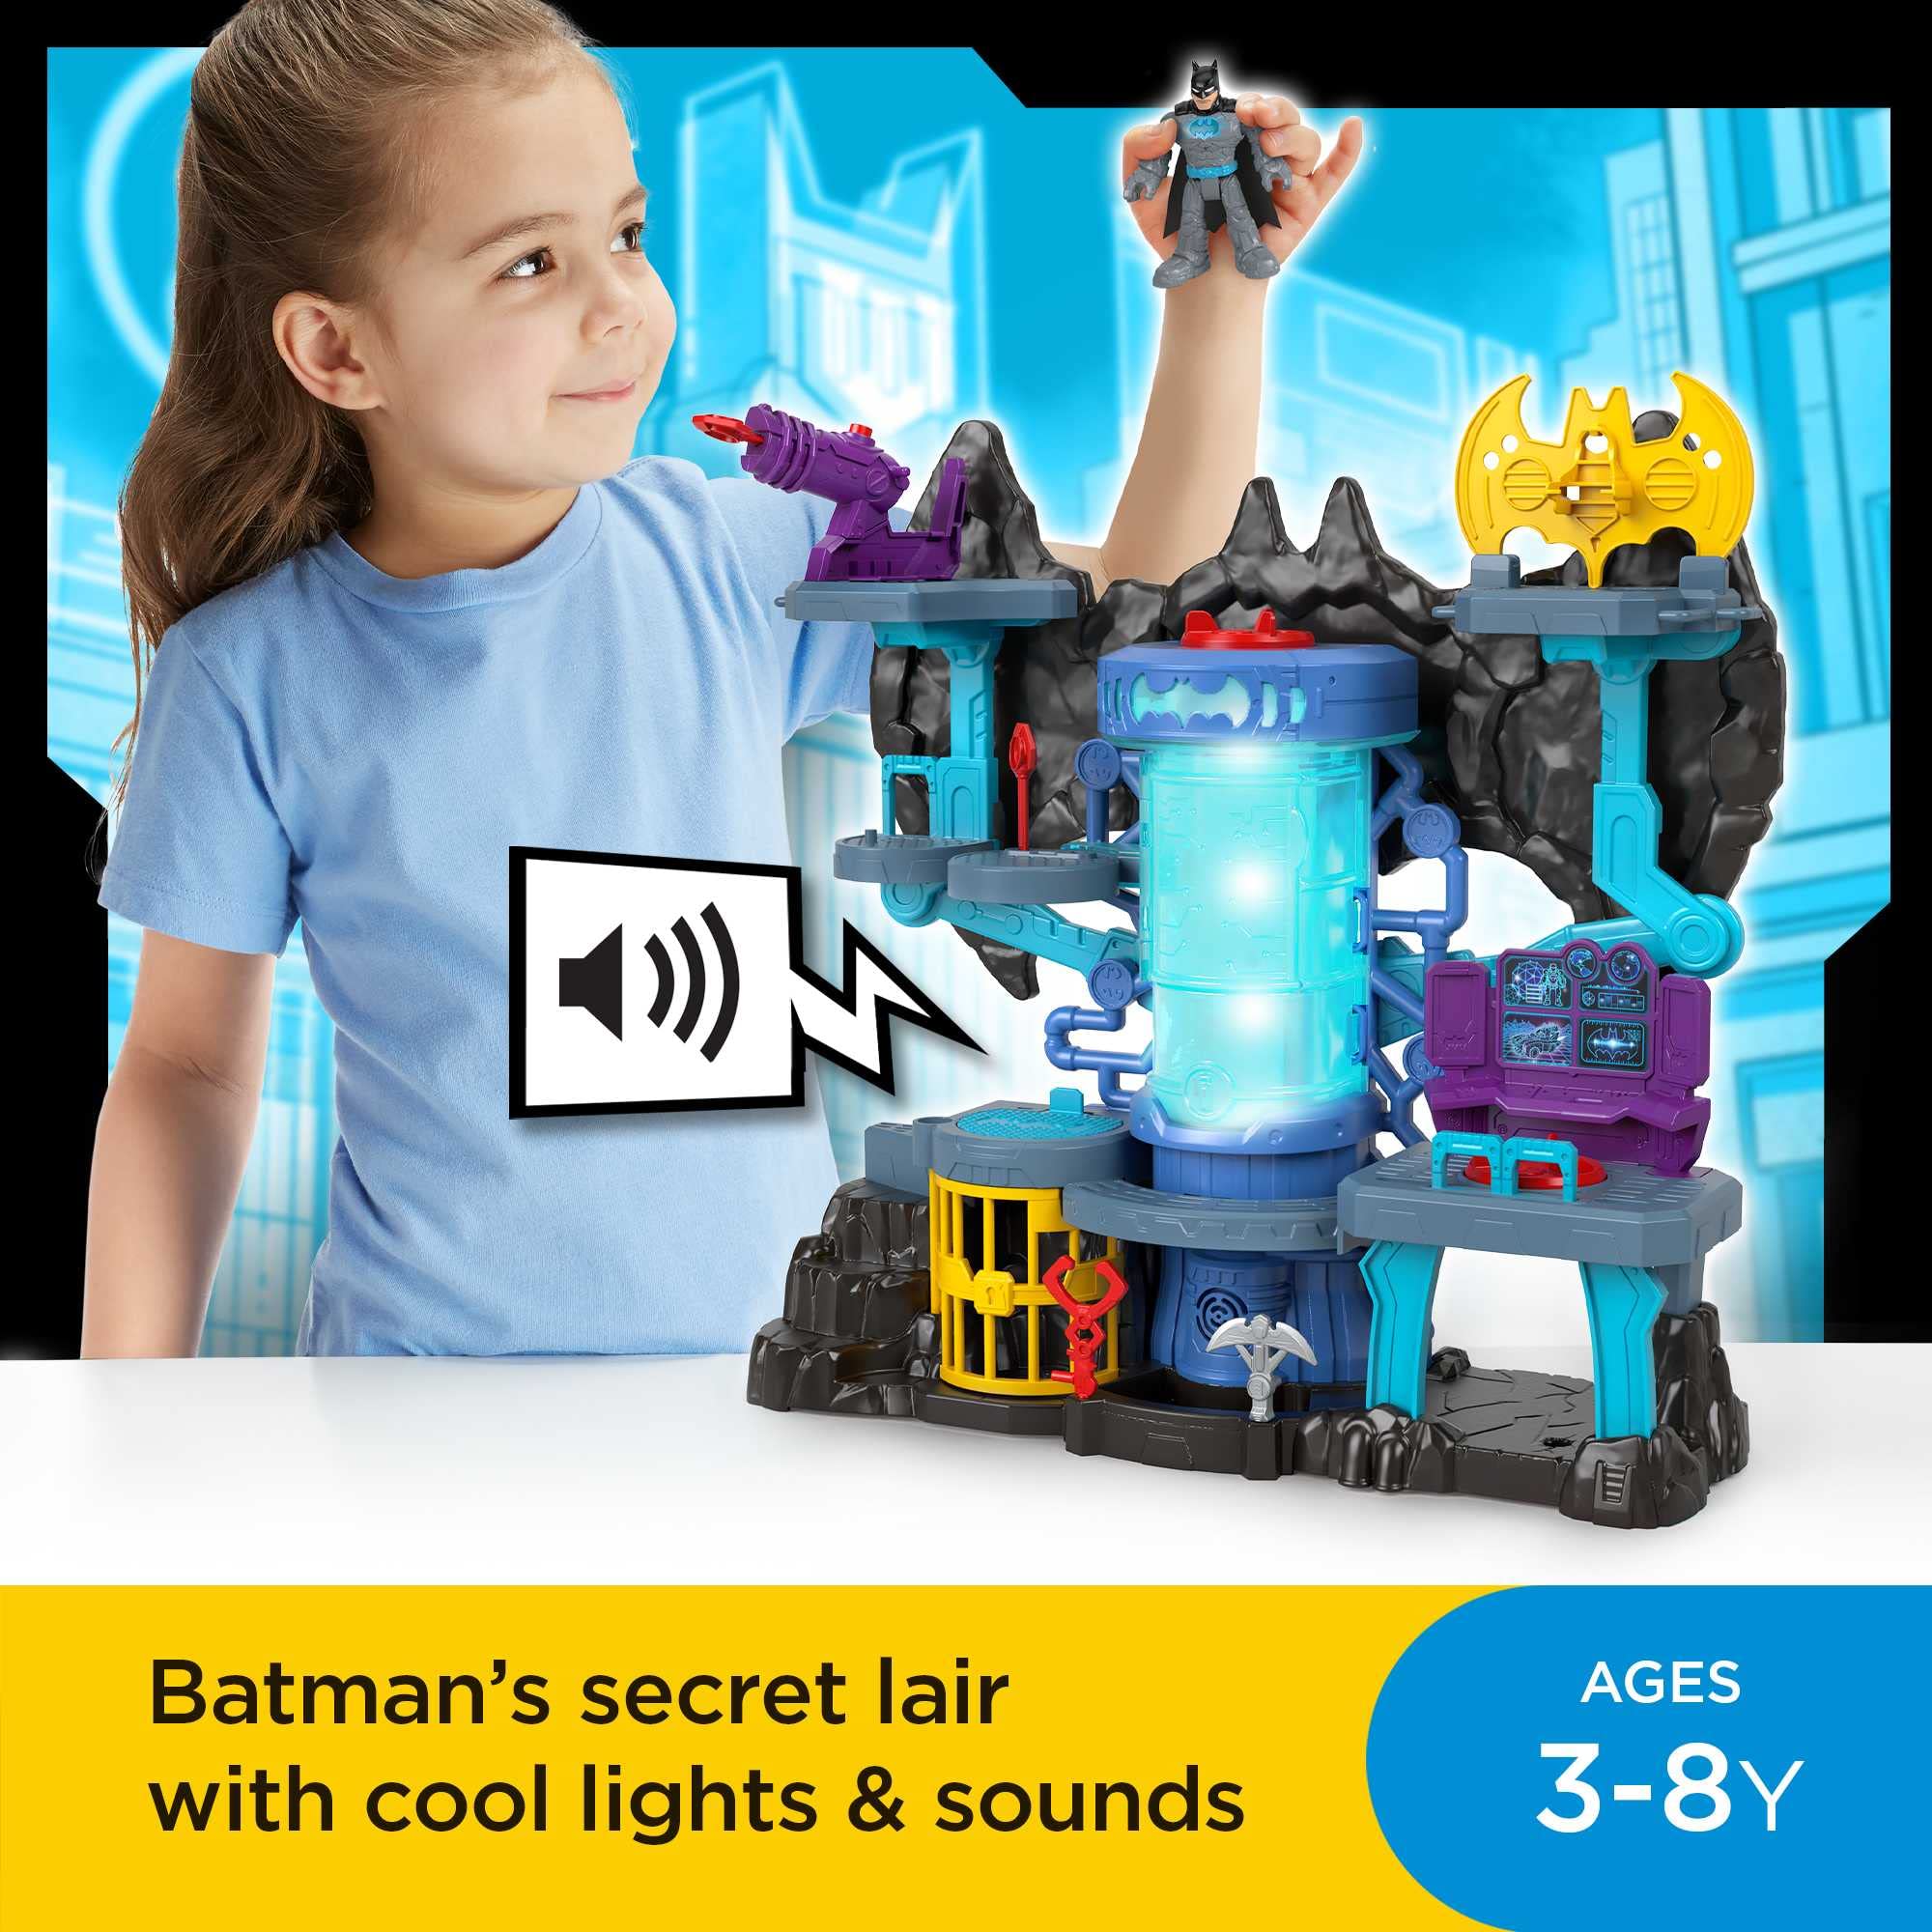 Fisher-Price DC Super Friends Imaginext Batman Figure and Bat-Tech Batcave Playset with Lights & Sounds for Preschool Pretend Play, 6 Play Pieces